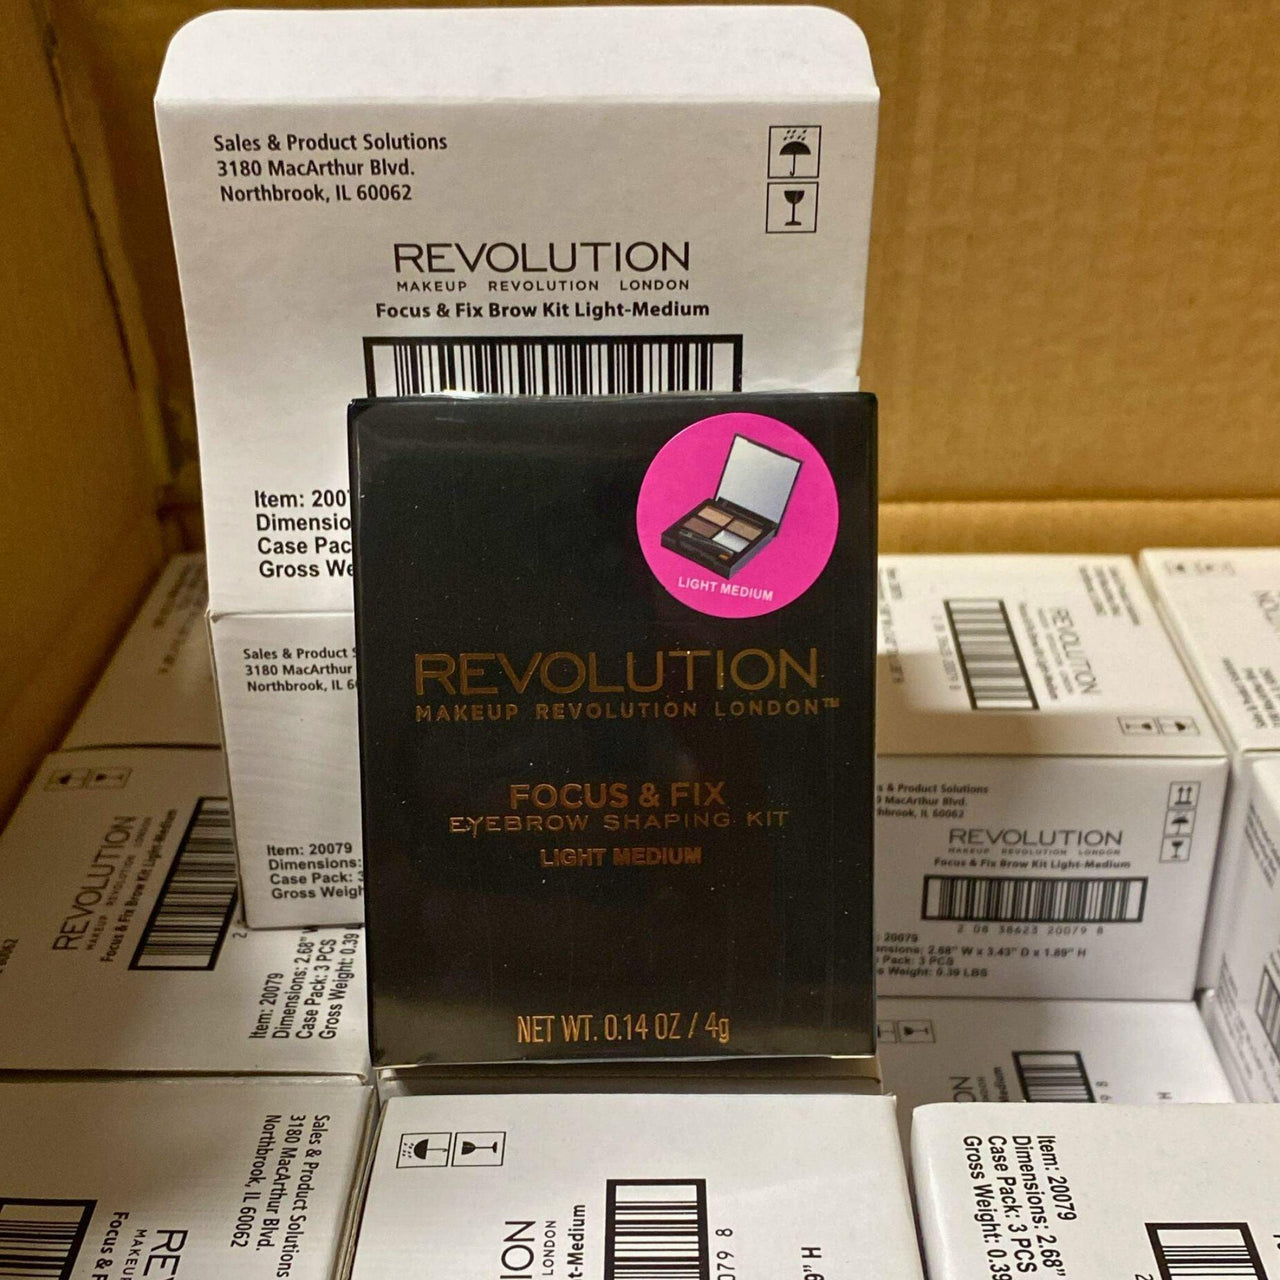 Revolution Makeup Revolution London Focus & Fix Eyebrow Shaping Kit Light Medium 0.14OZ (36 Pcs Lot) - Discount Wholesalers Inc